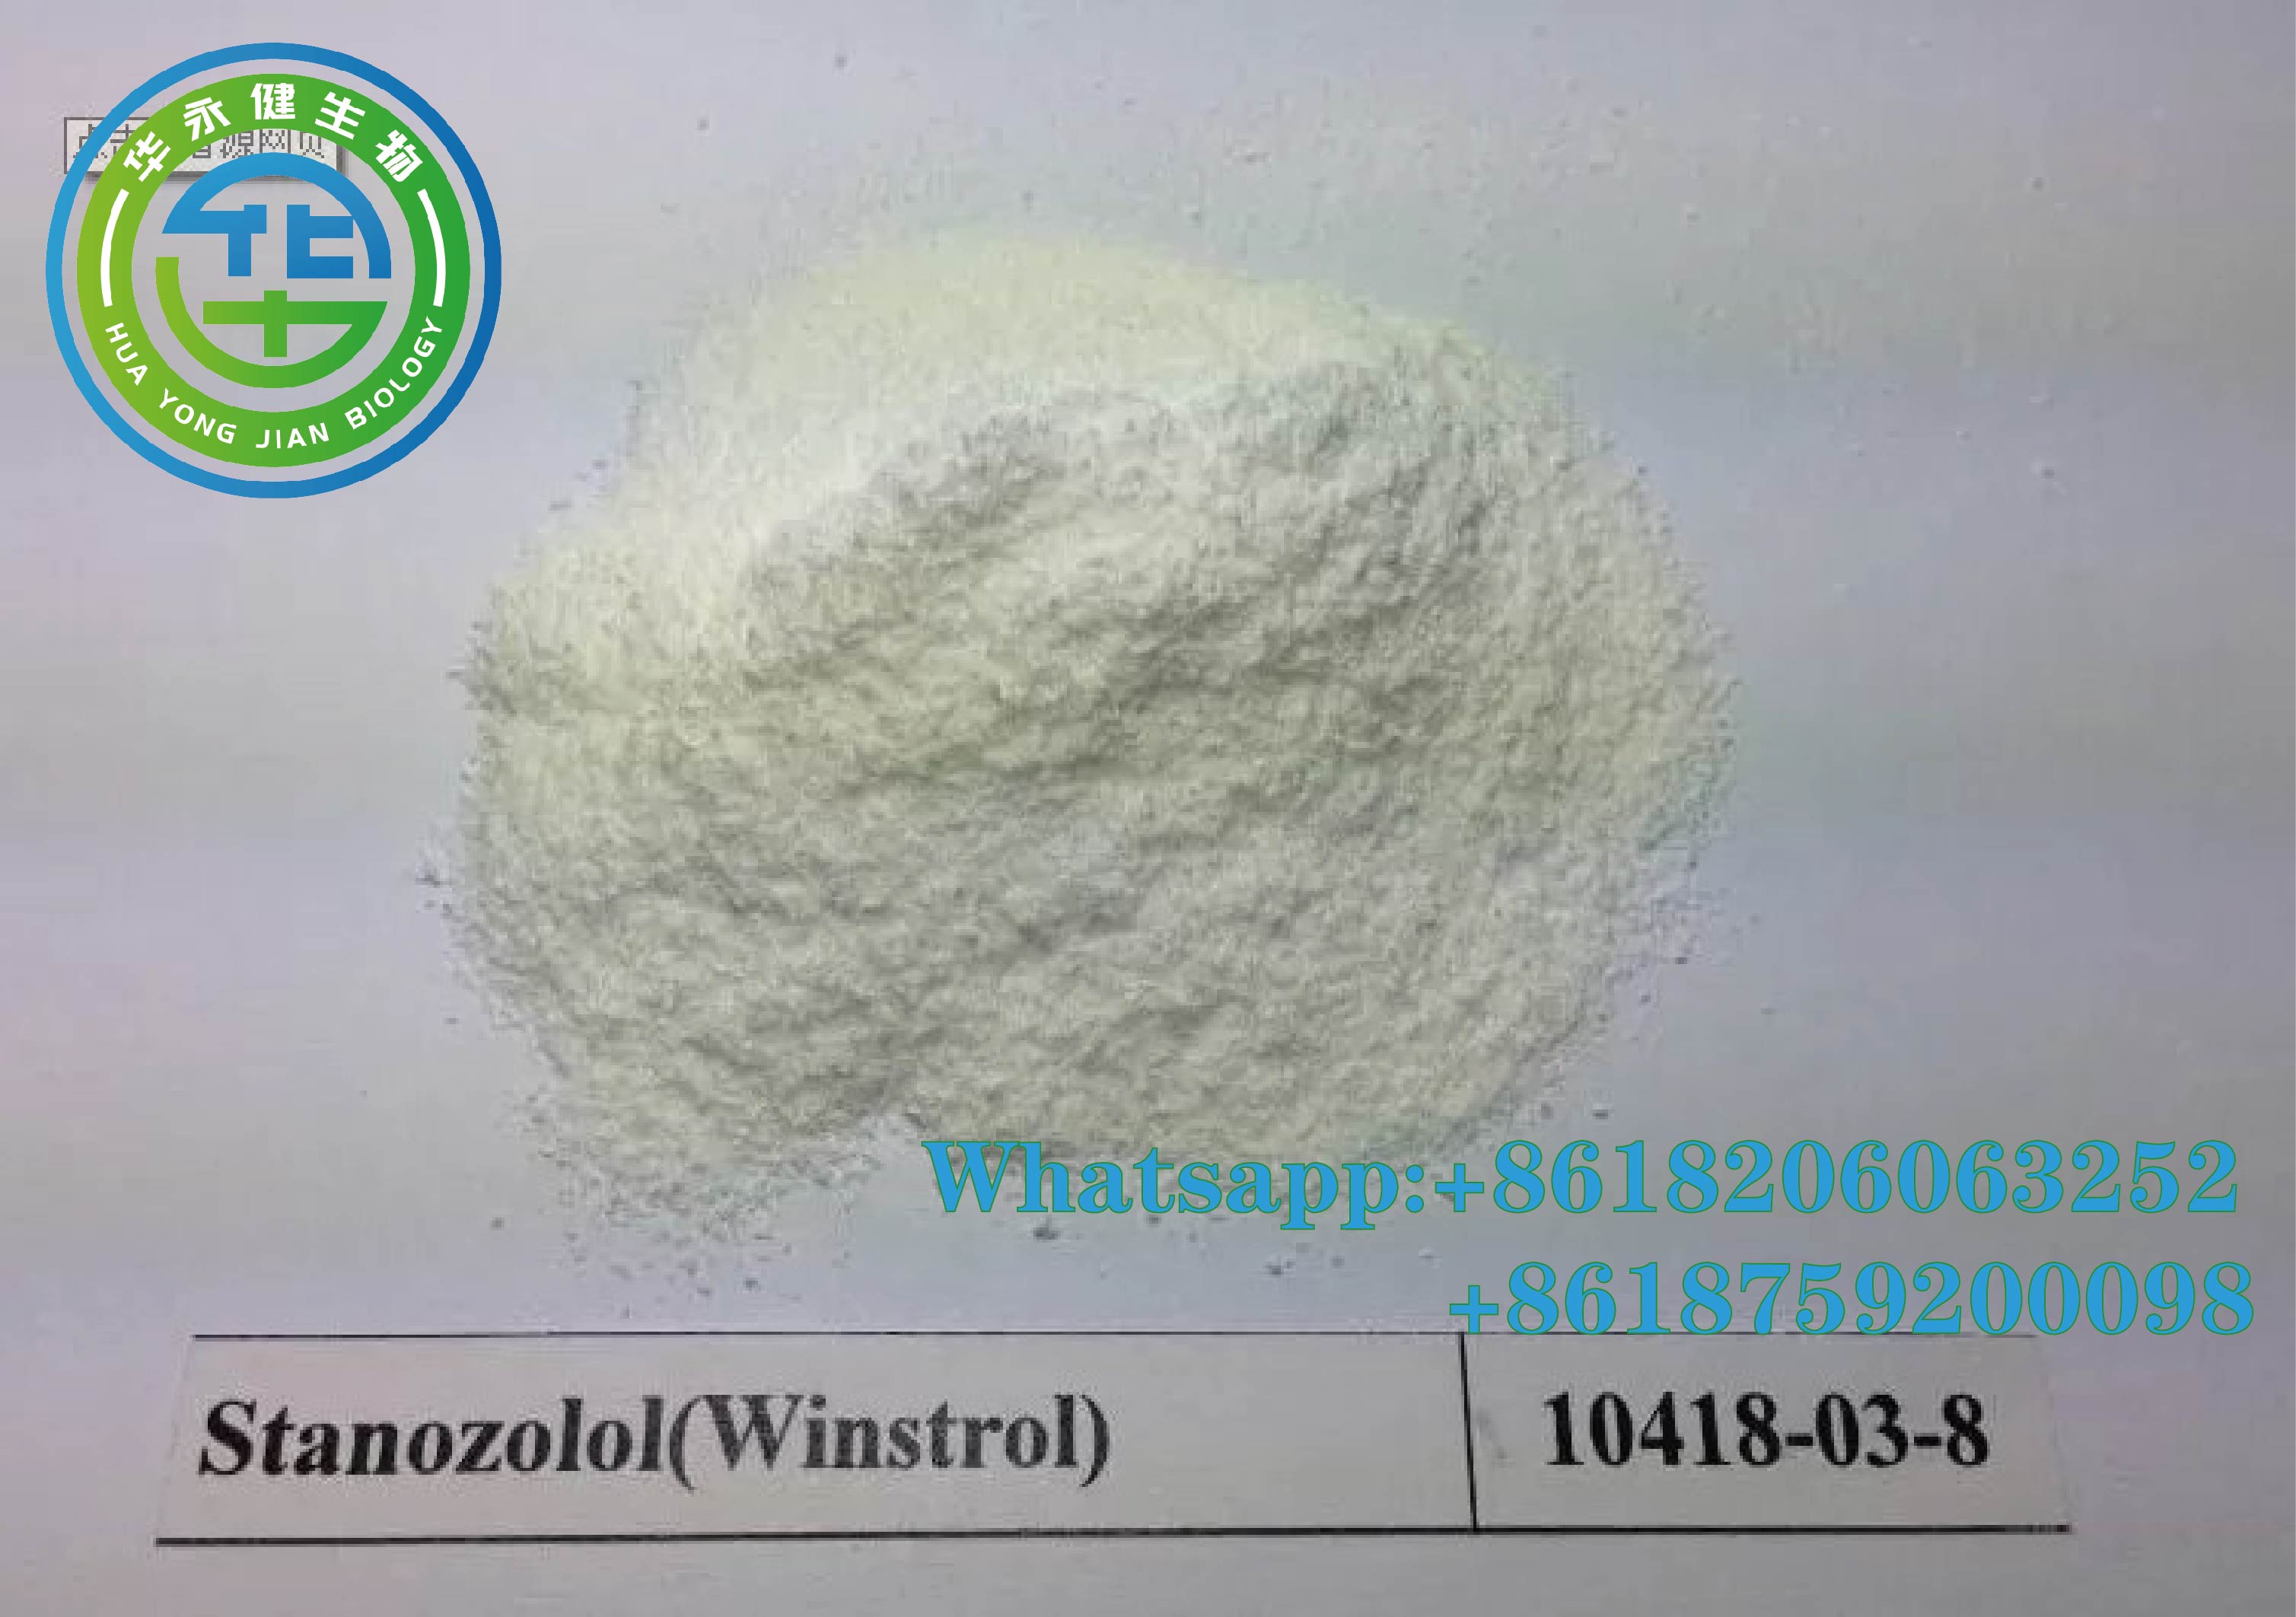 Stanozolol (Winstrol)4